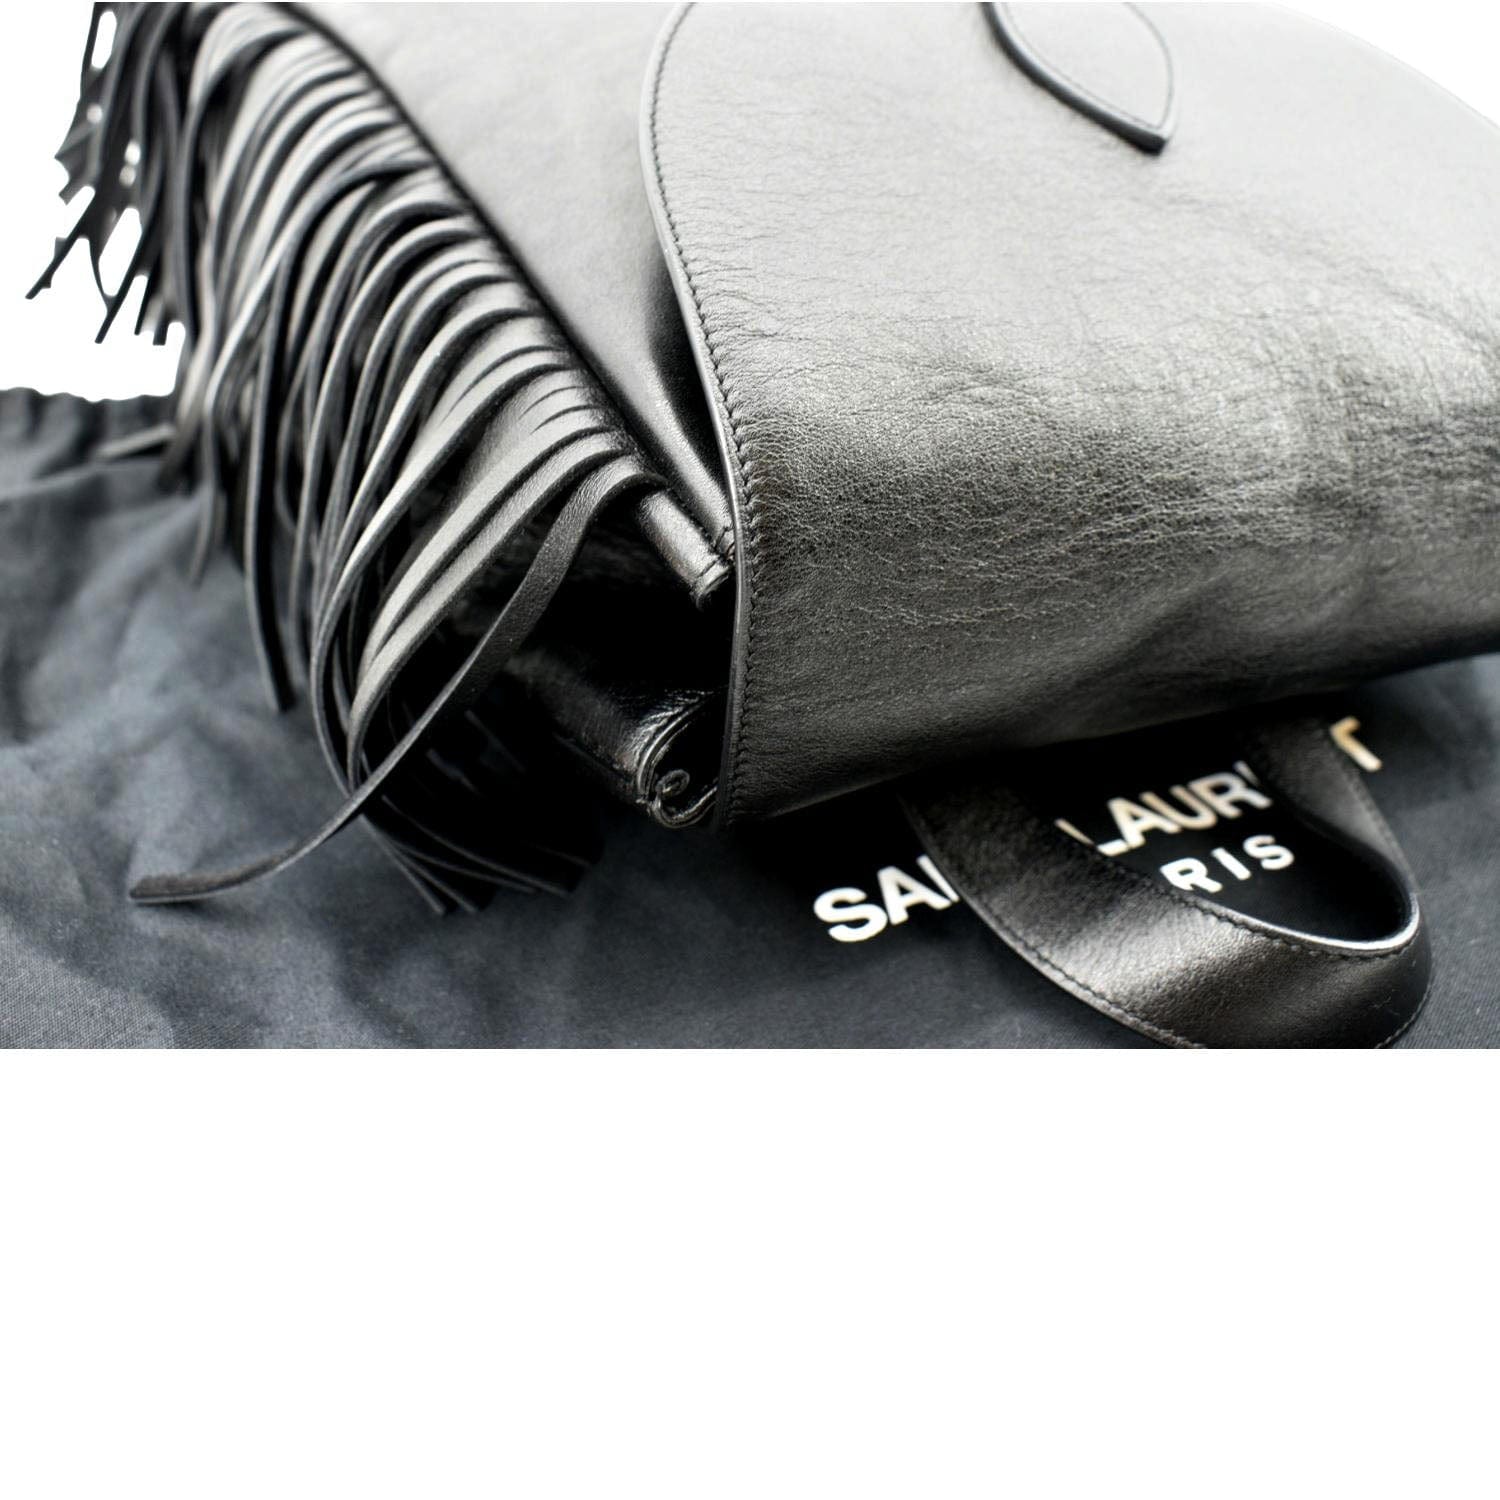 YVES SAINT LAURENT Fringe Calfskin Leather Backpack Bag Black